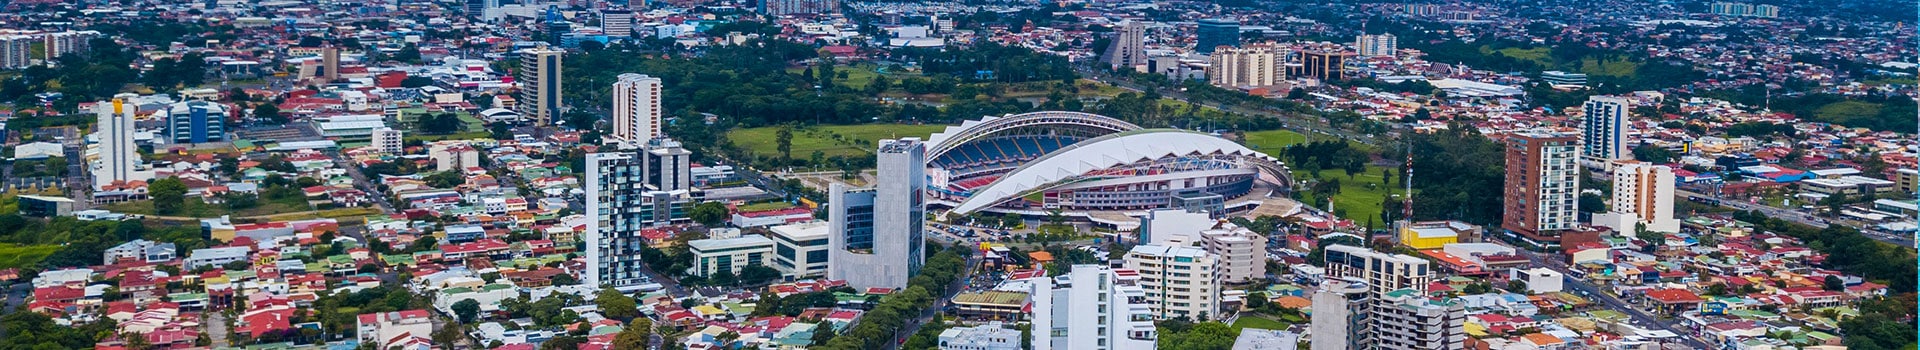 Panama city - San jose